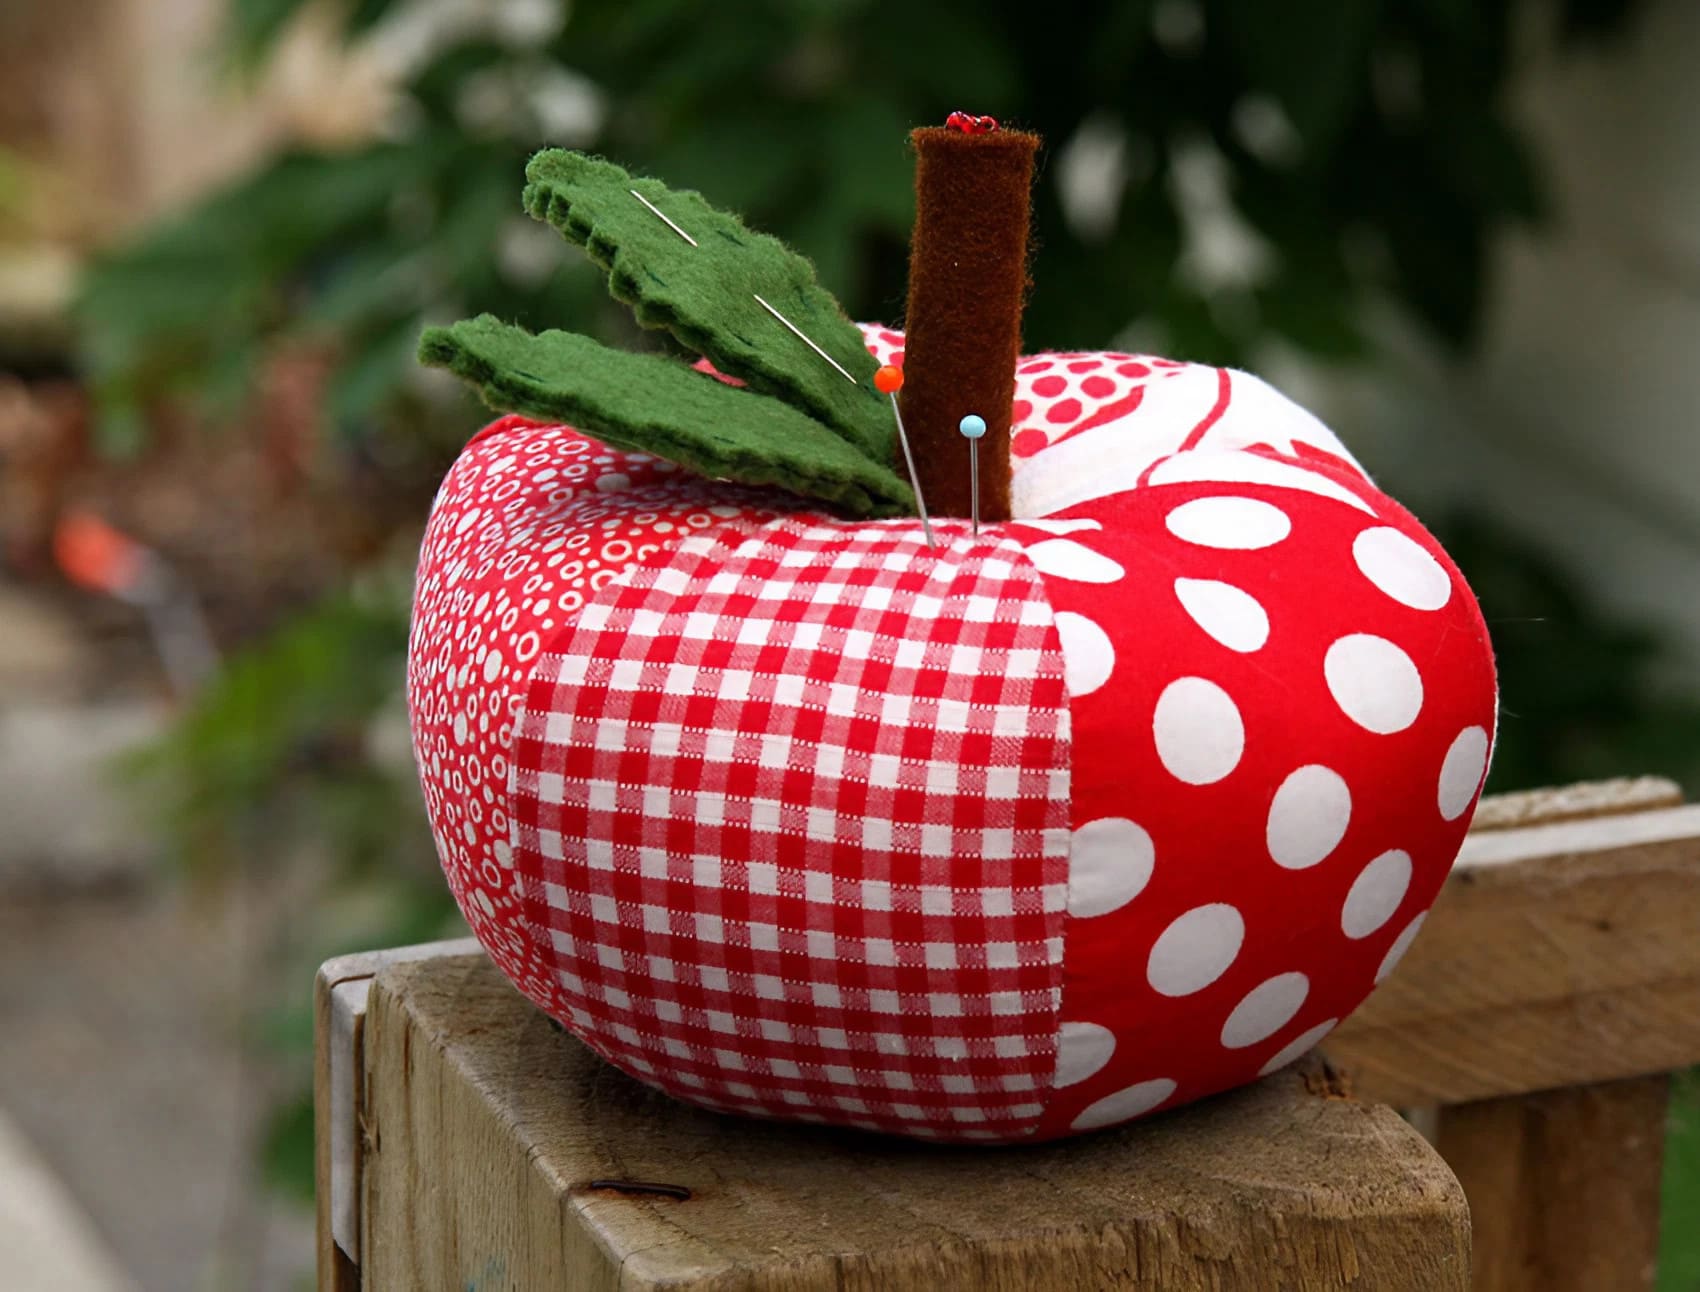 DIY Apple & Pear Pincushions